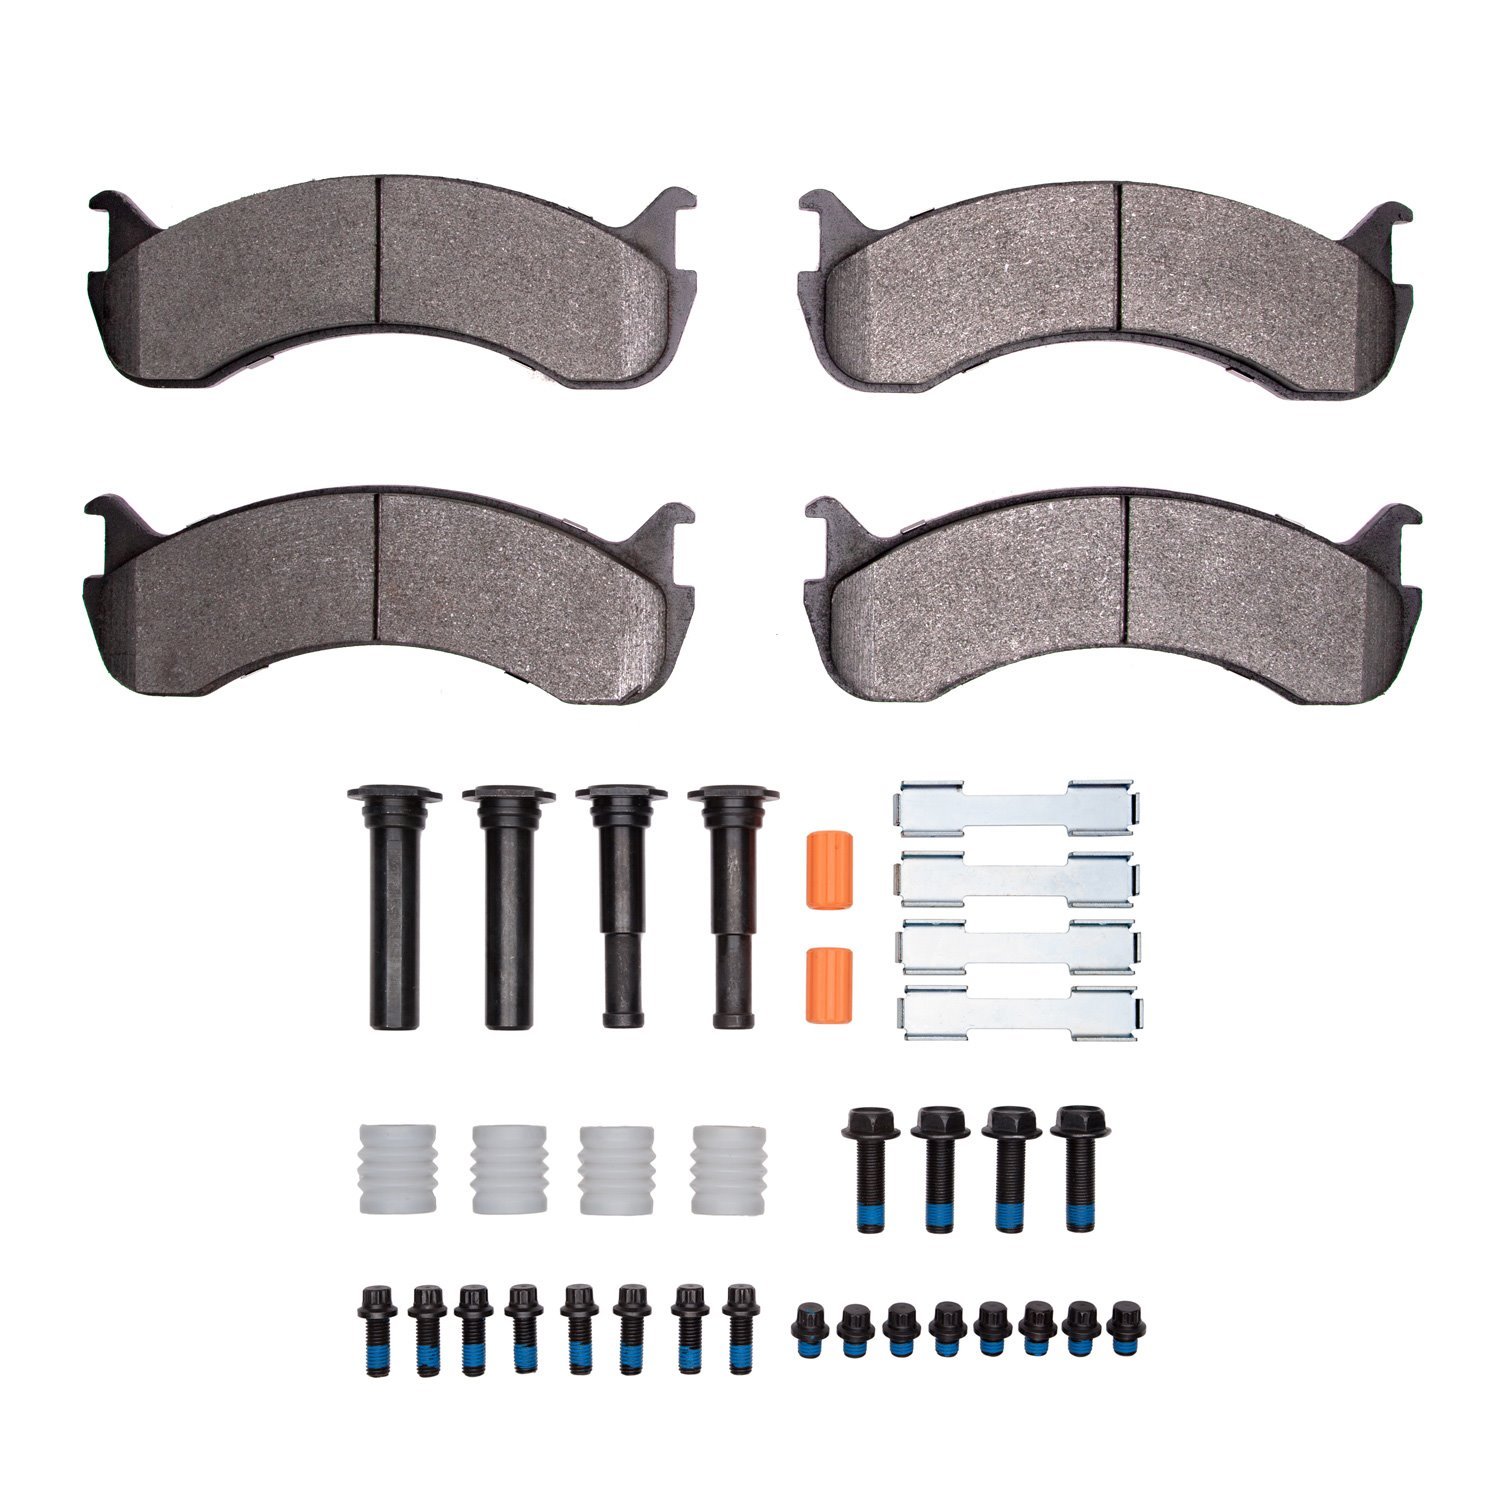 1214-0786-01 Heavy-Duty Brake Pads & Hardware Kit, Fits Select Multiple Makes/Models, Position: Fr,Fr & Rr,Rear,Rr